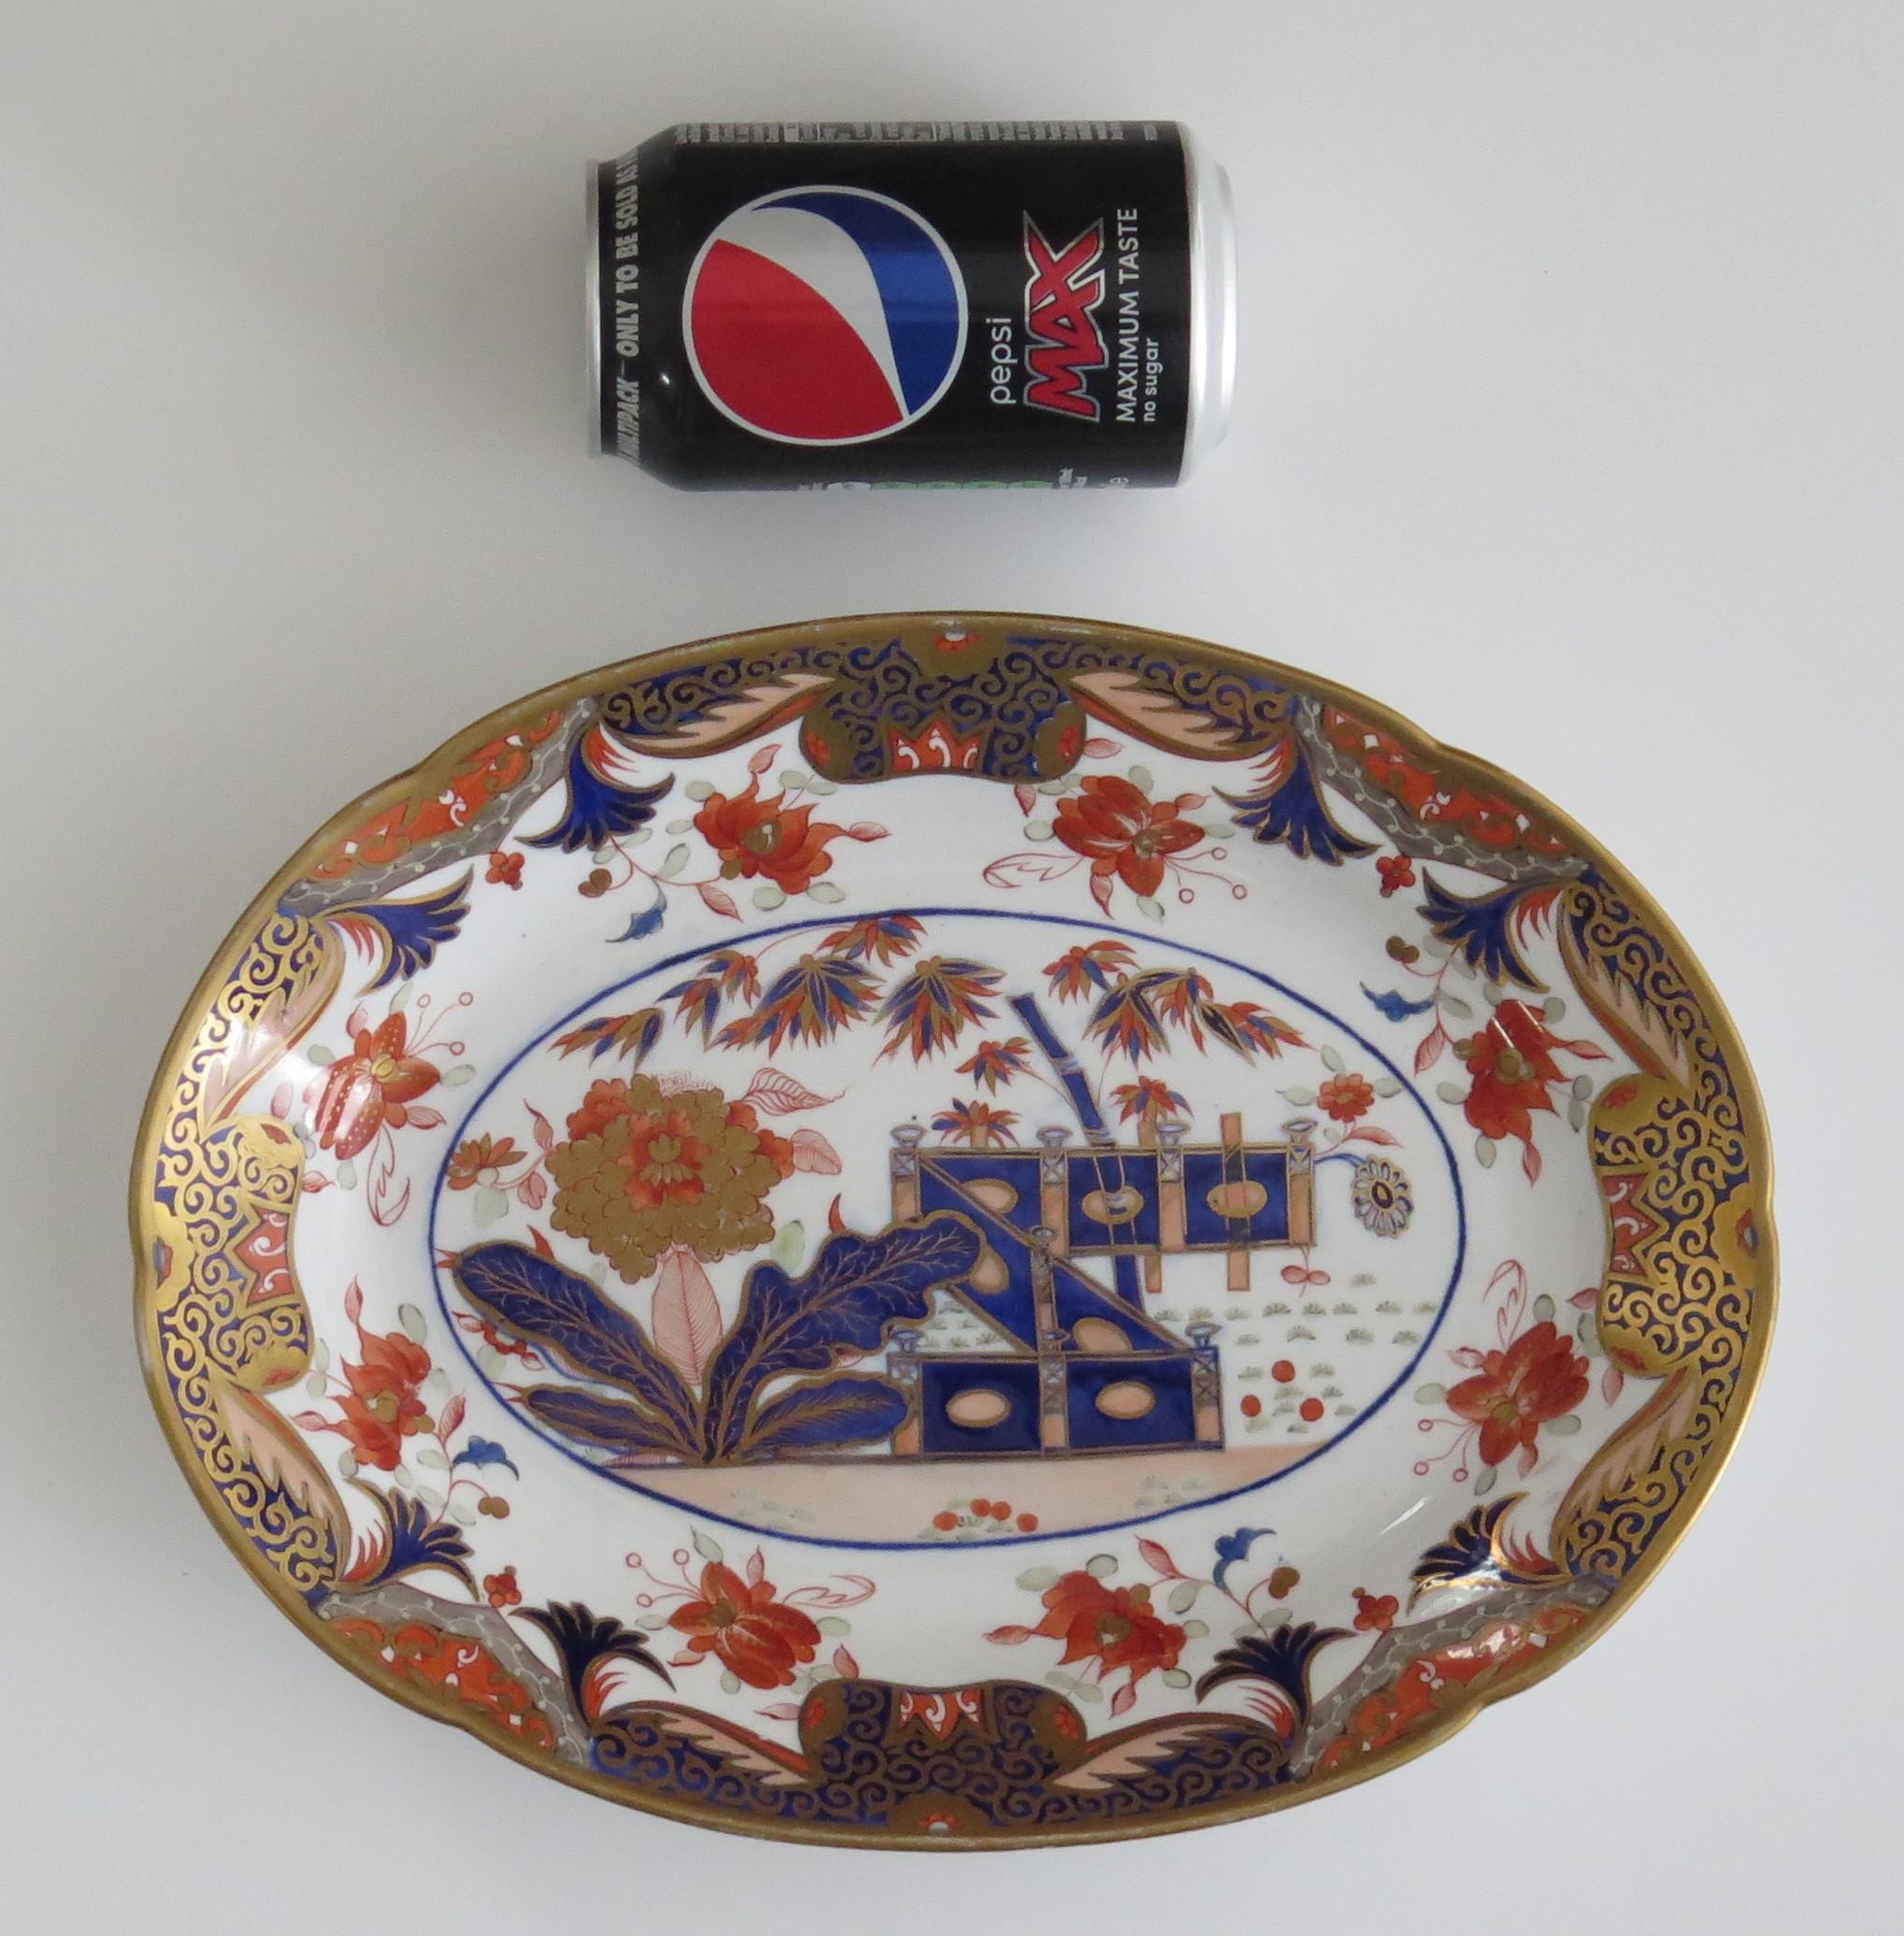 Spode Porcelain Serving Platter or Dish Hand Painted & Gilded Ptn 967 circa 1810 For Sale 6